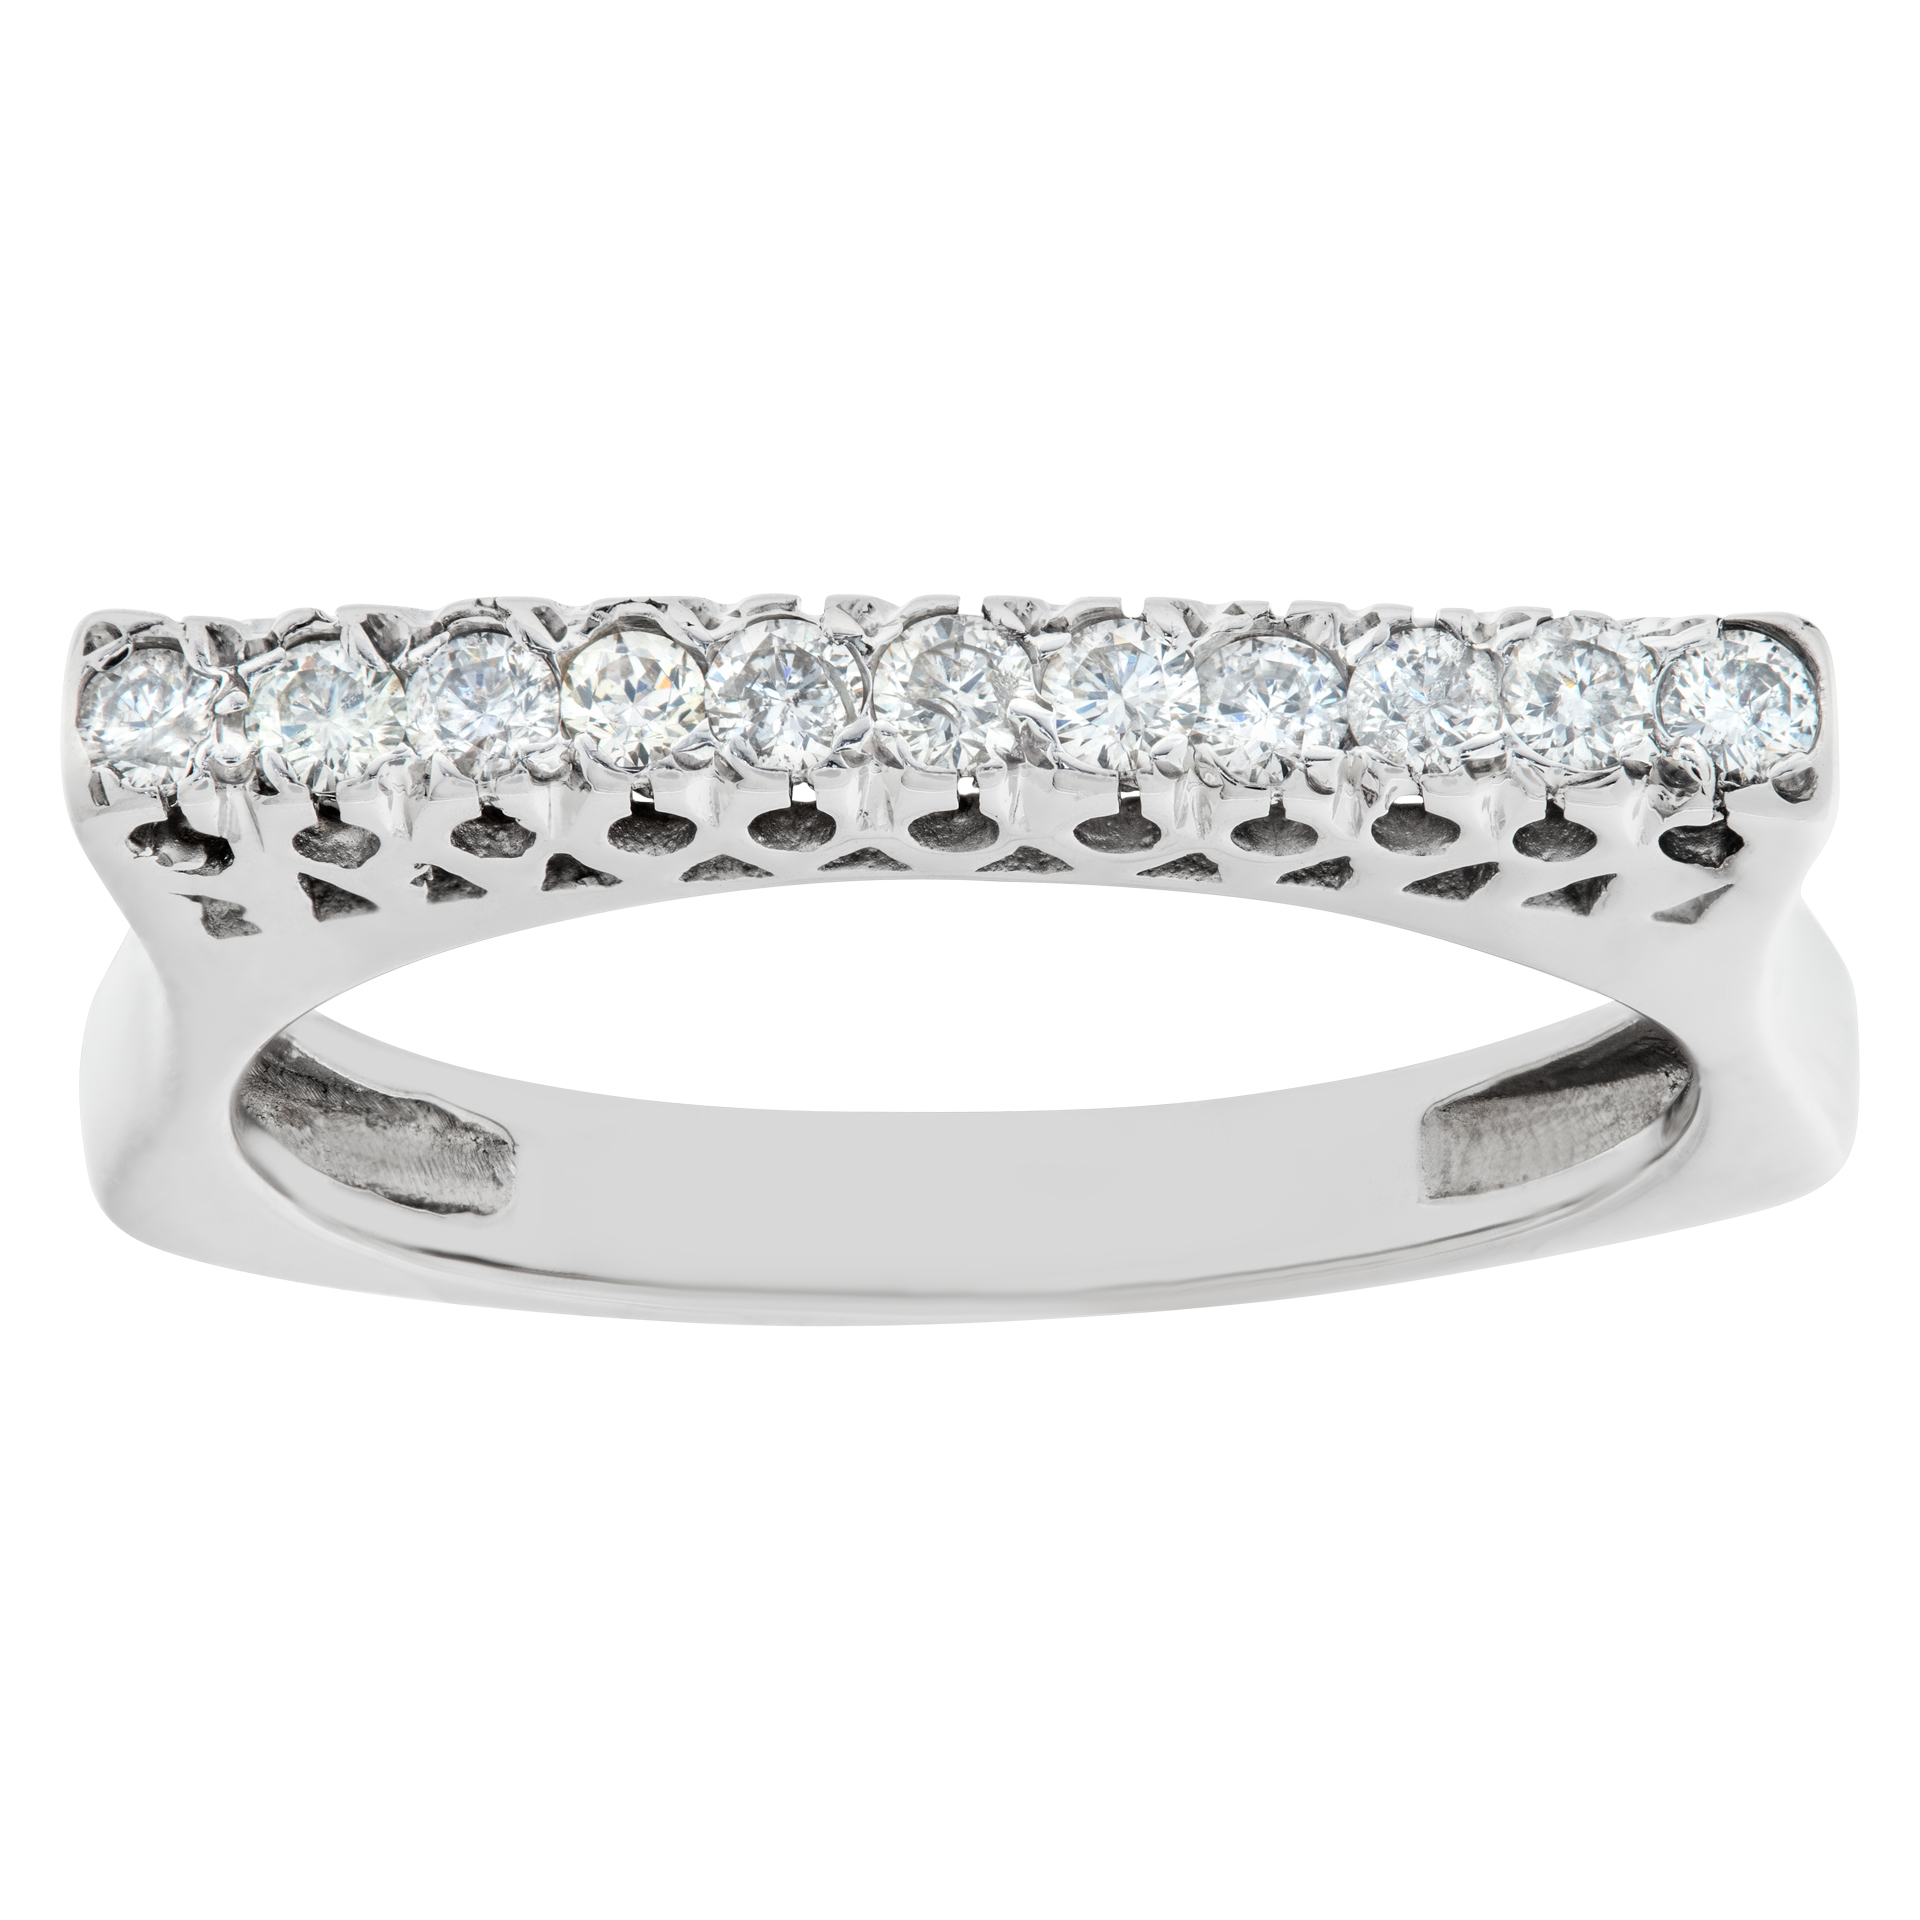 Single row diamond ring in 18k white gold. 0.33 carat (I-J color, SI1 clarity). Size 8